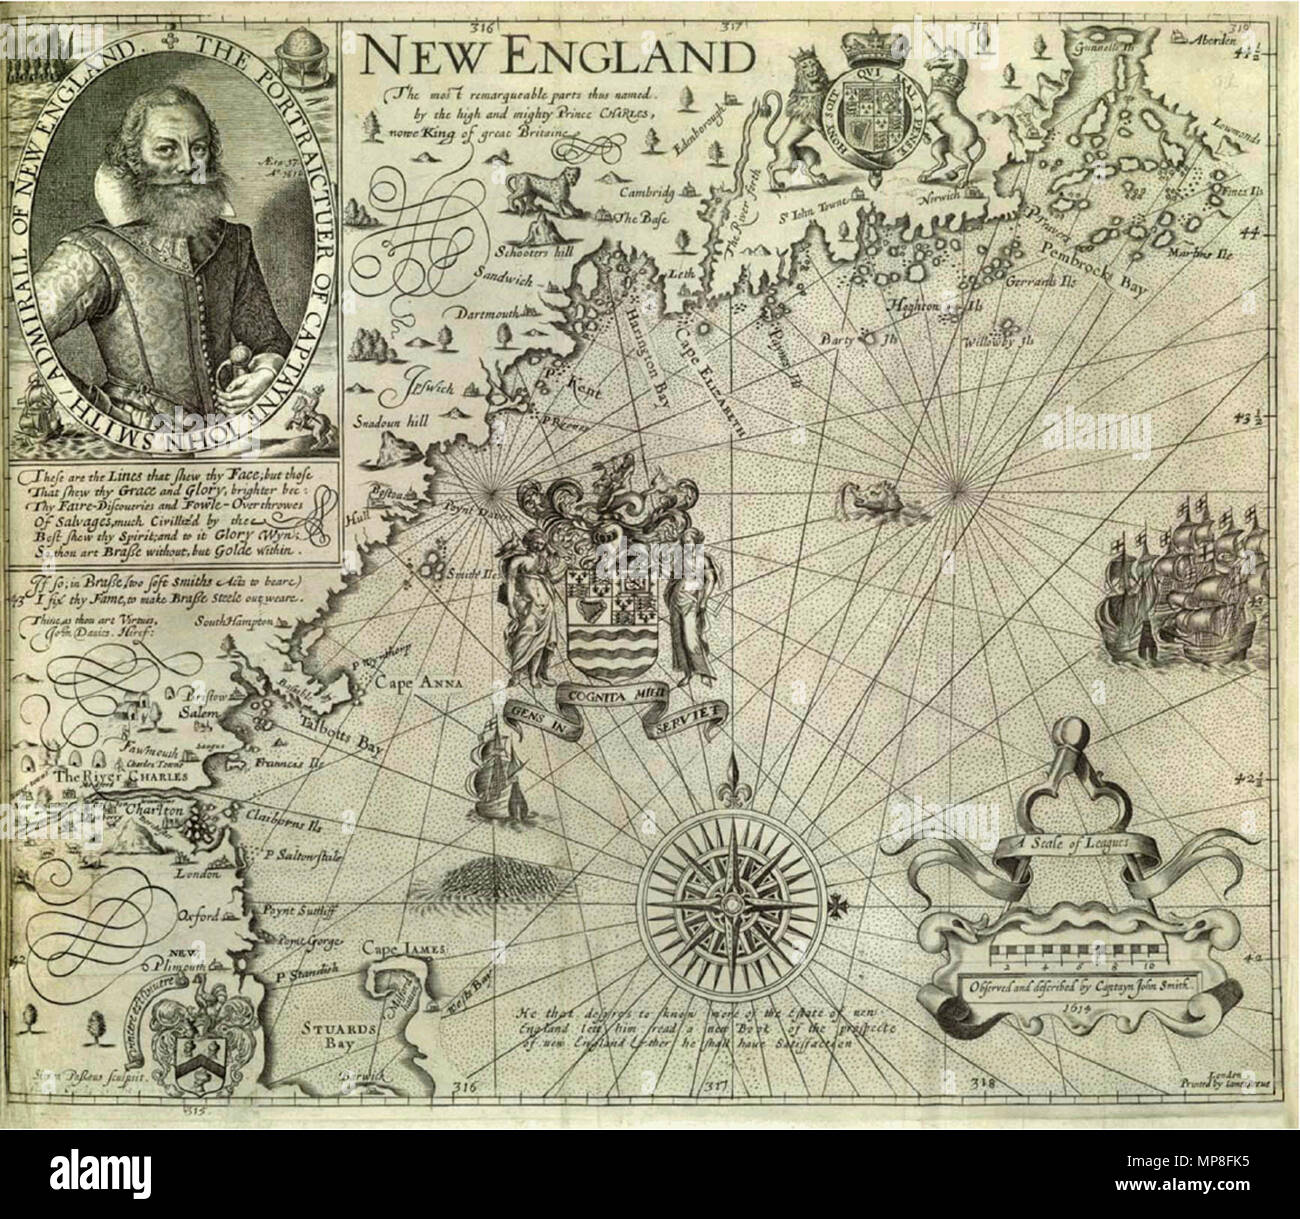 . Map of New England . 1616. John Smith of Jamestown 735 John Smith 1616 New England map Stock Photo